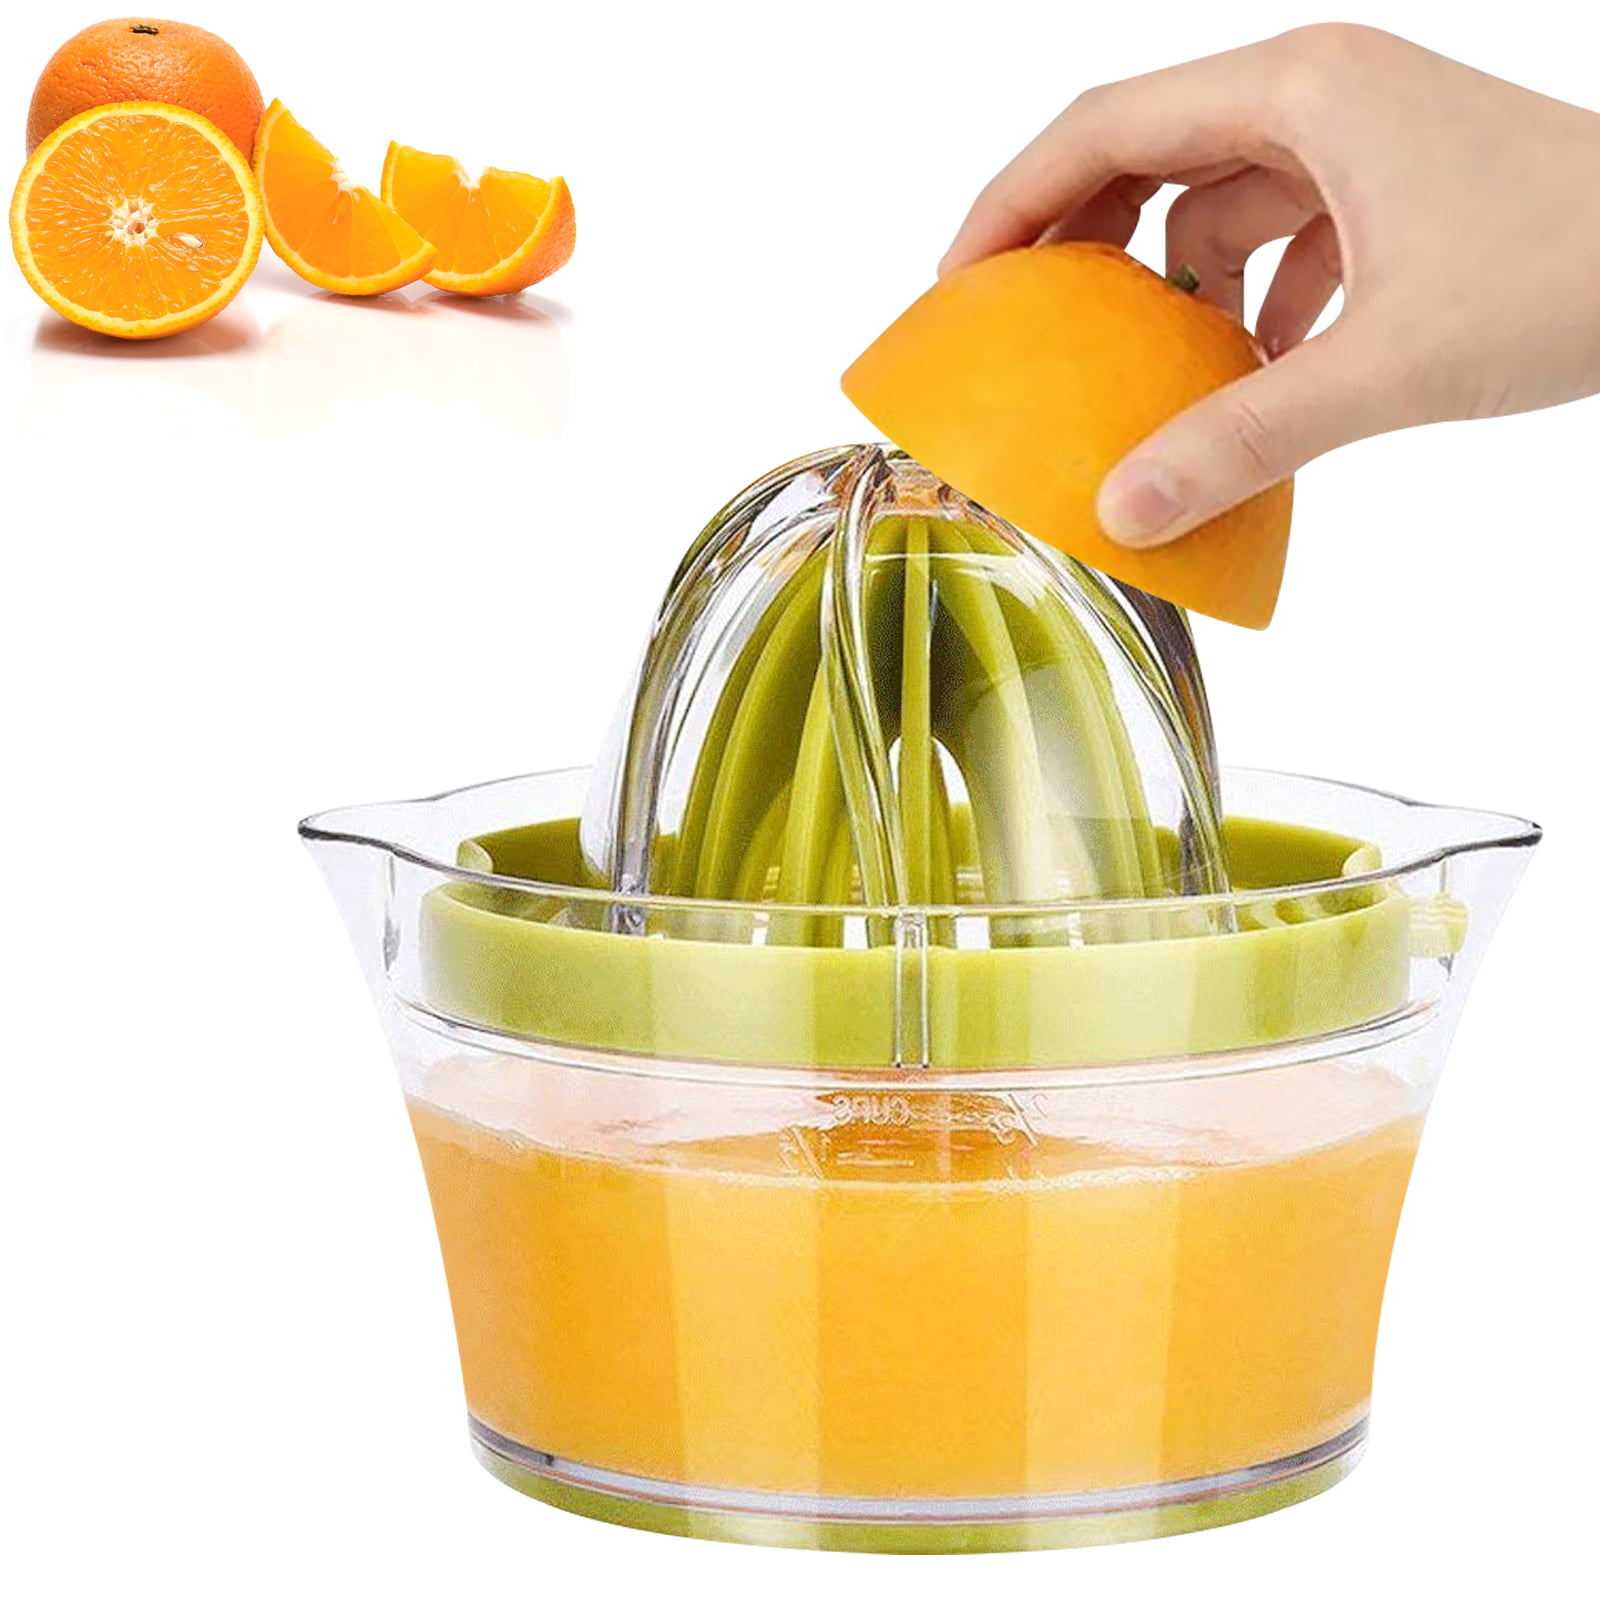 Lime Squeezer Lemon Juicer Hand Press with Built-in Measuring Cup and Egg separator 20 Oz Citrus Juicer Space Saving Orange Juice Squeezer IPNOW Manual Juicer BPA Free Lemon Squeezer 